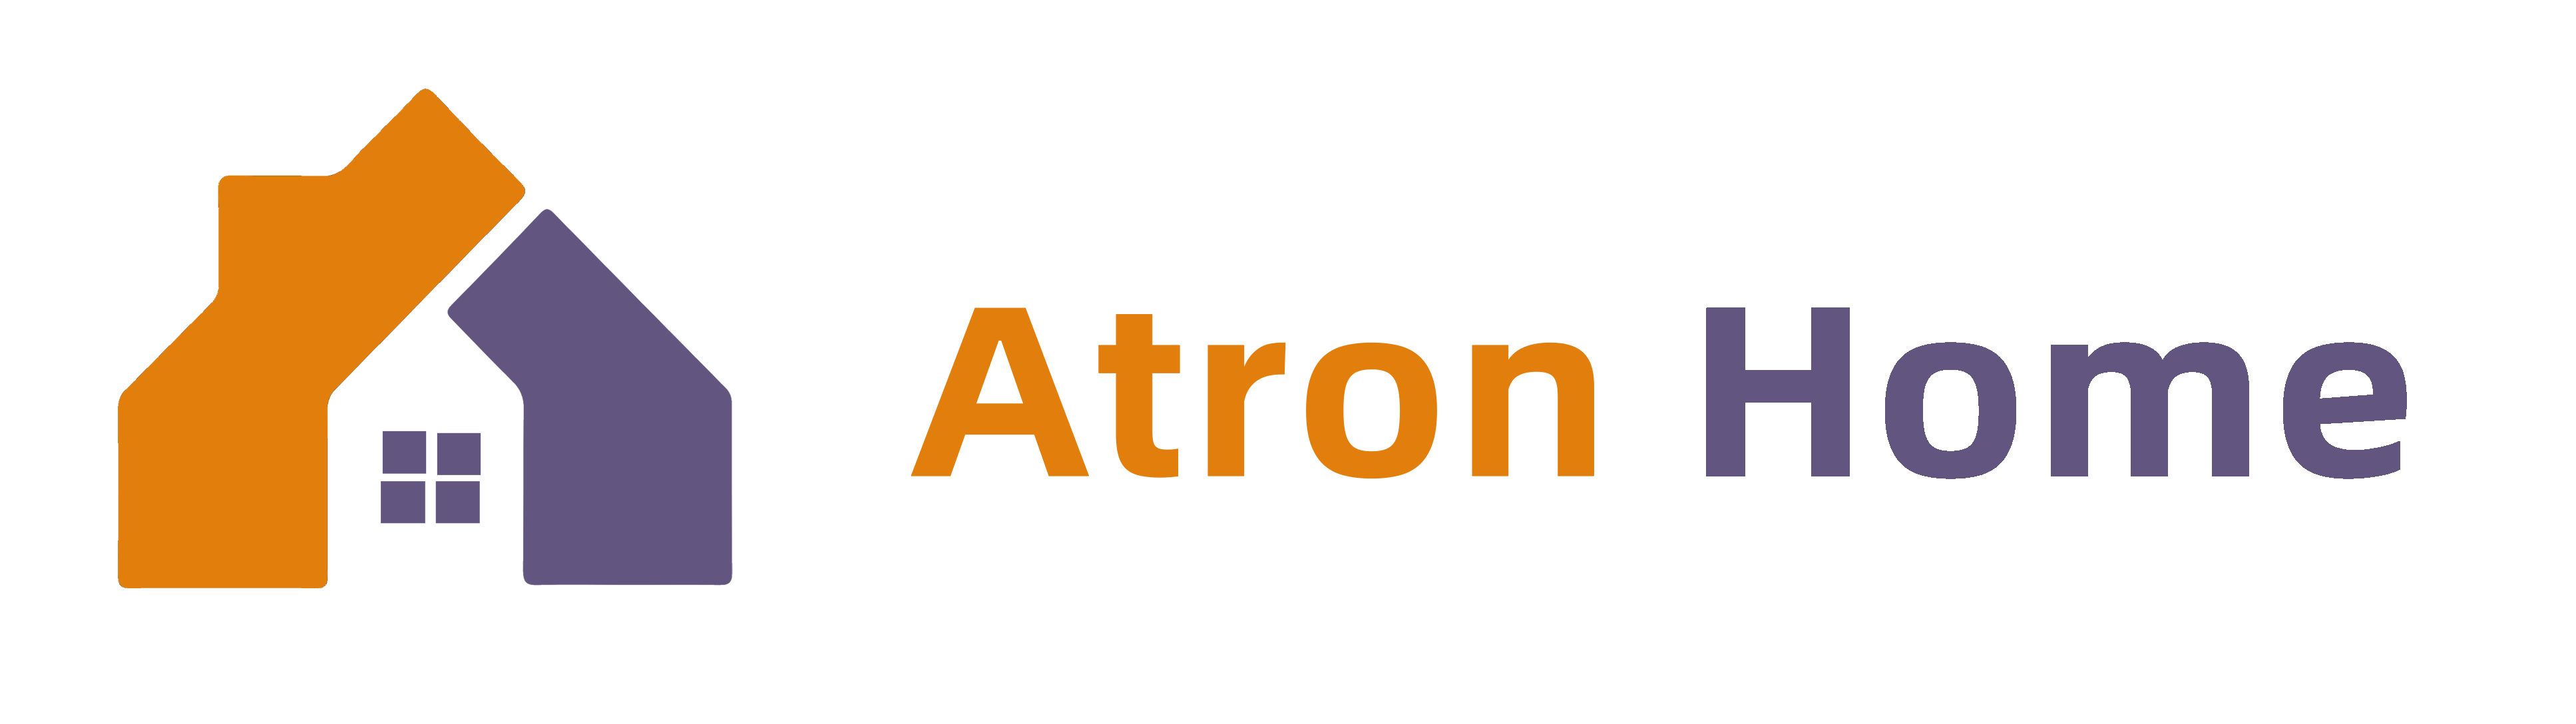 Atron Home 网站logo.png